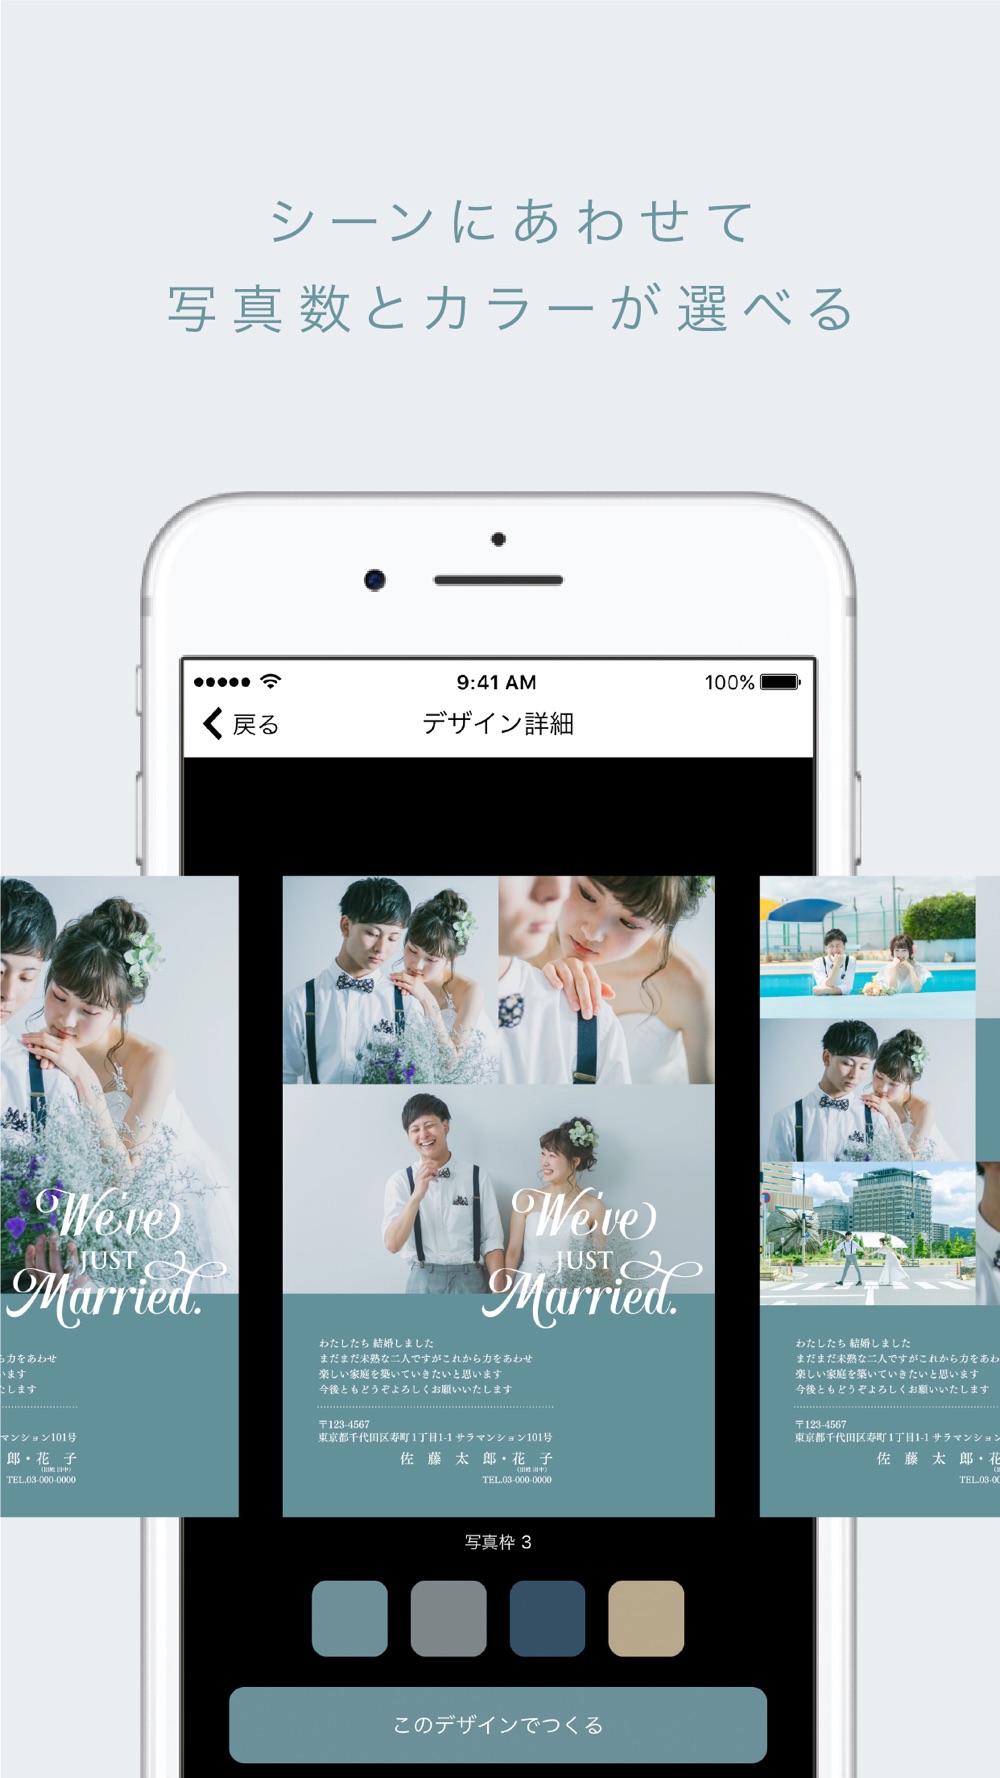 Tomoni Wedding Letter Free Download App For Iphone Steprimo Com